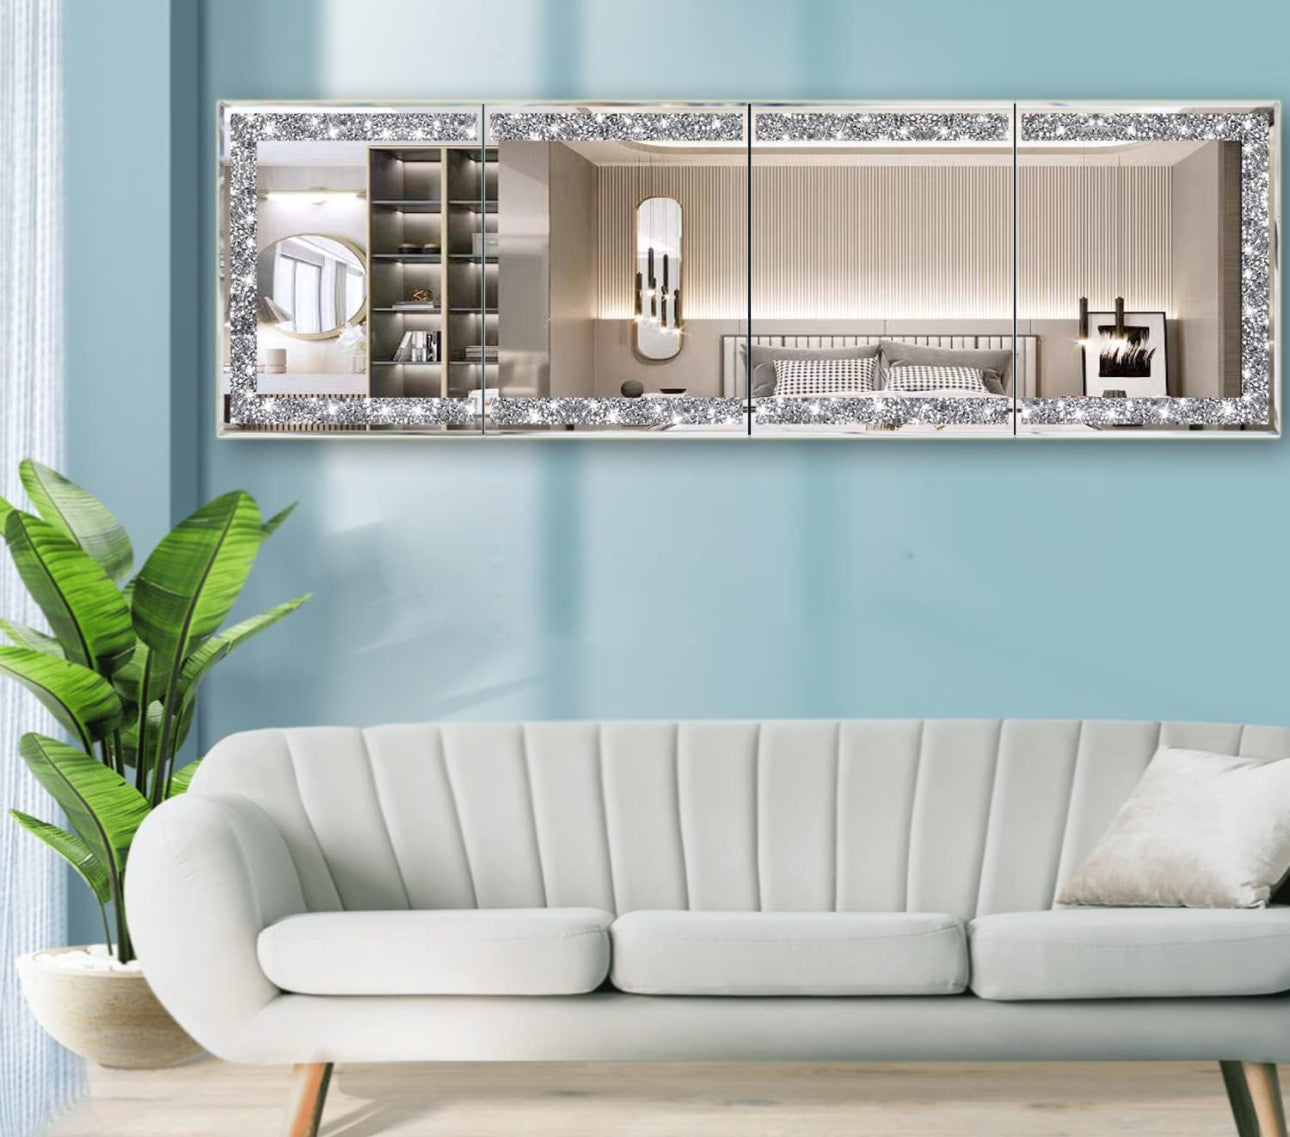 Meetart Full Length Mirror Tiles,Crystal Crush Diamond Full Body Wall Mirror,14''x11'' 4PCS Glass Frameless